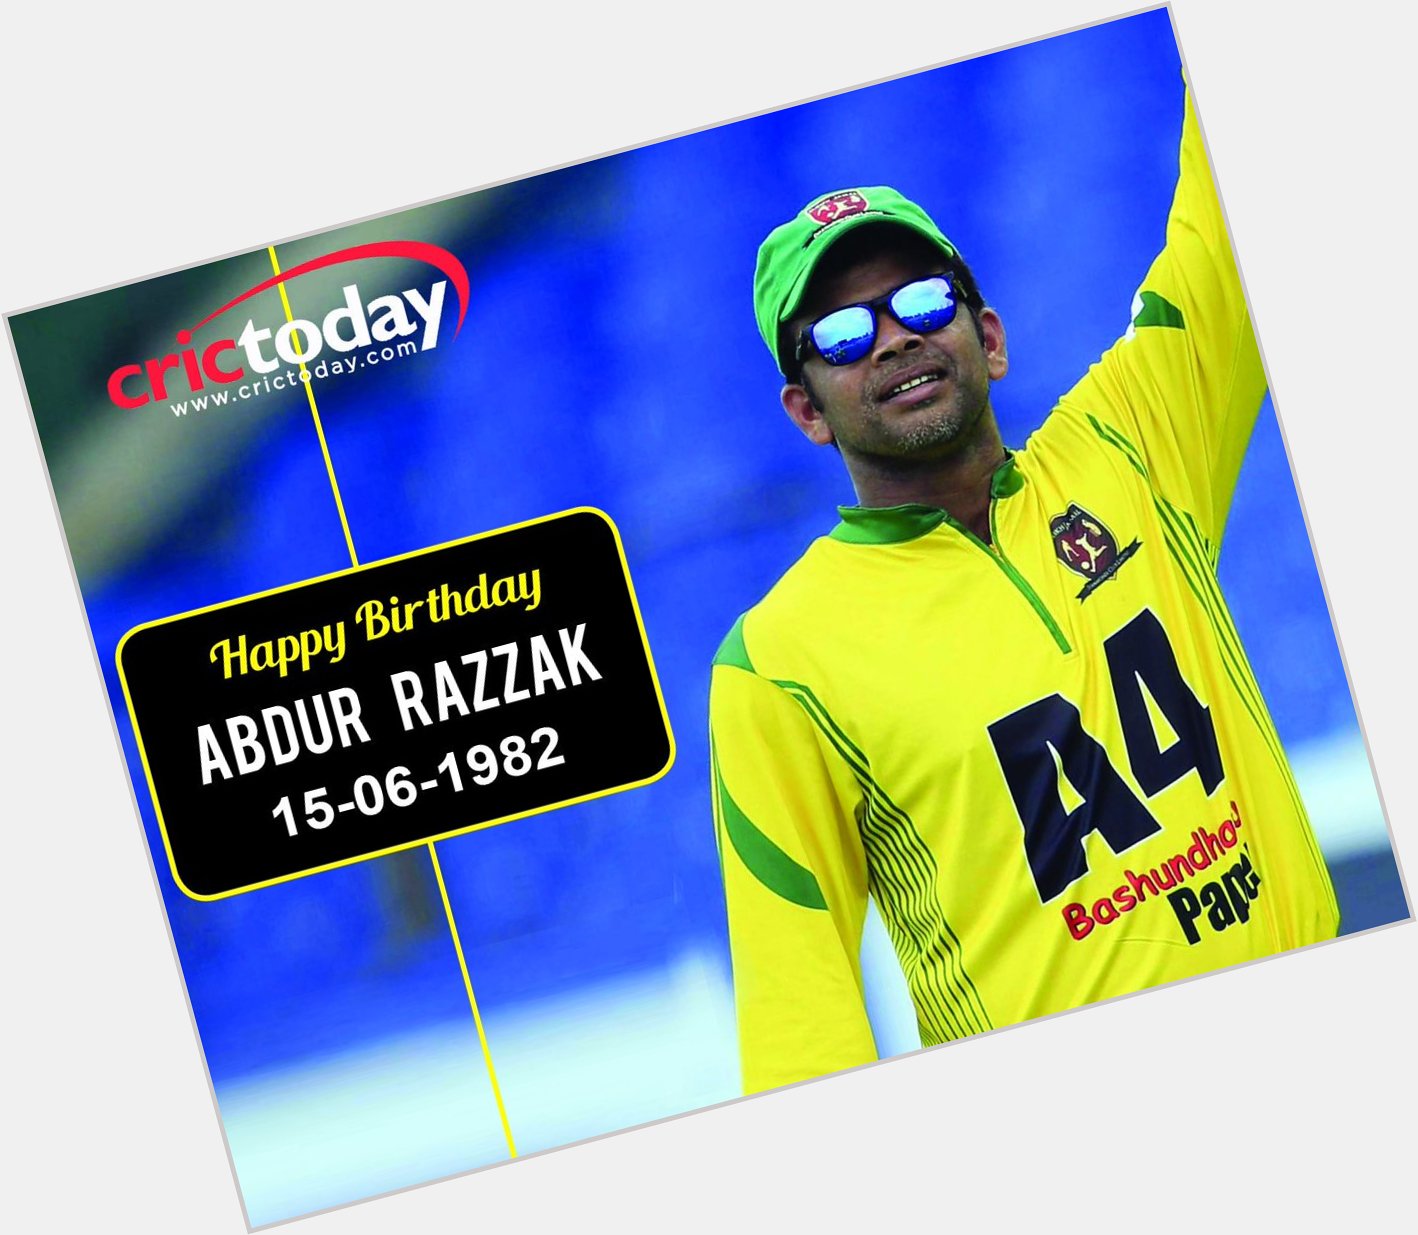  Happy Birthday Abdur Razzak 